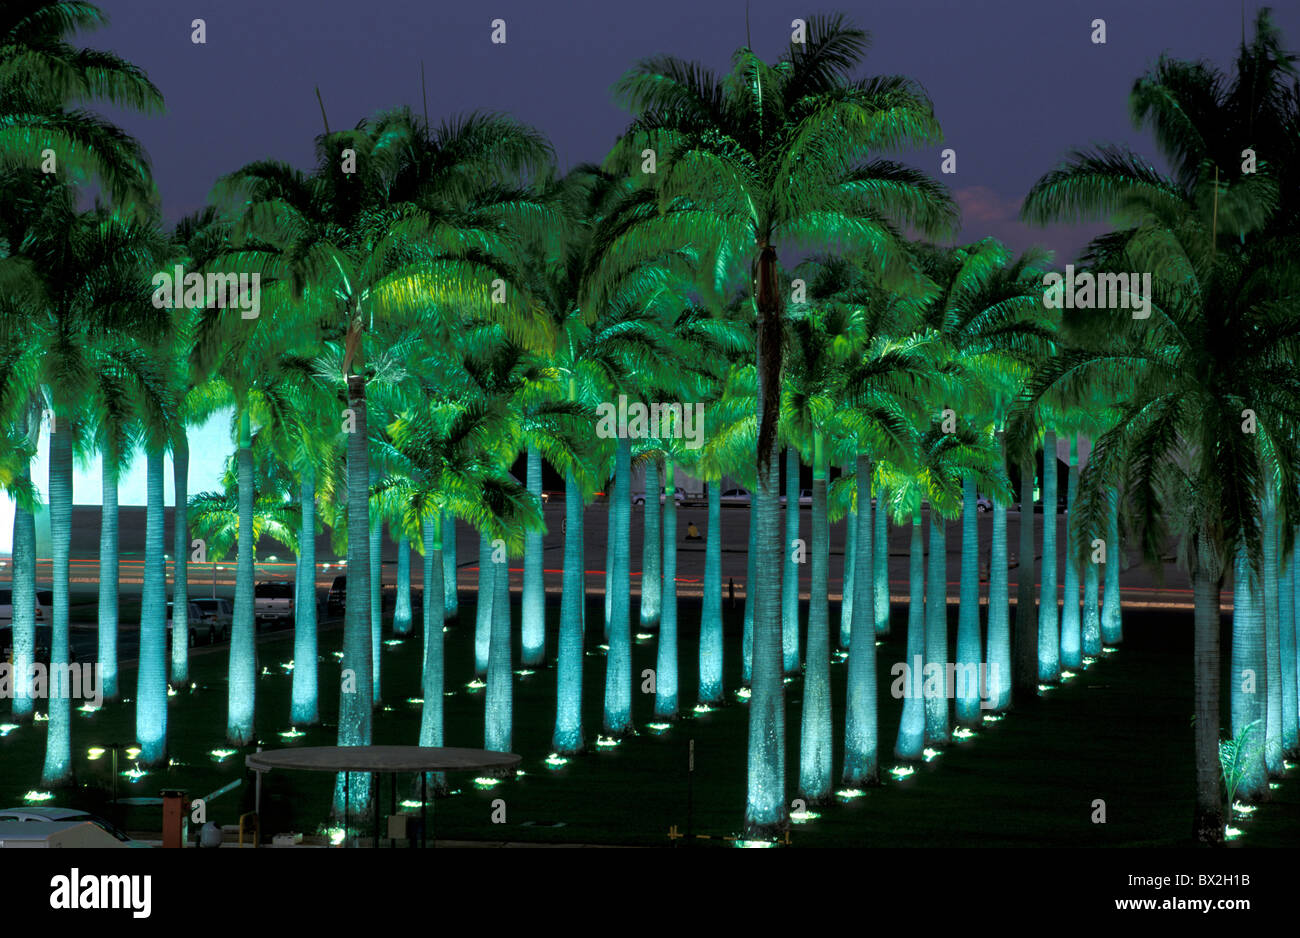 Brasilia Brazil South America park palm trees show art lights Stock Photo